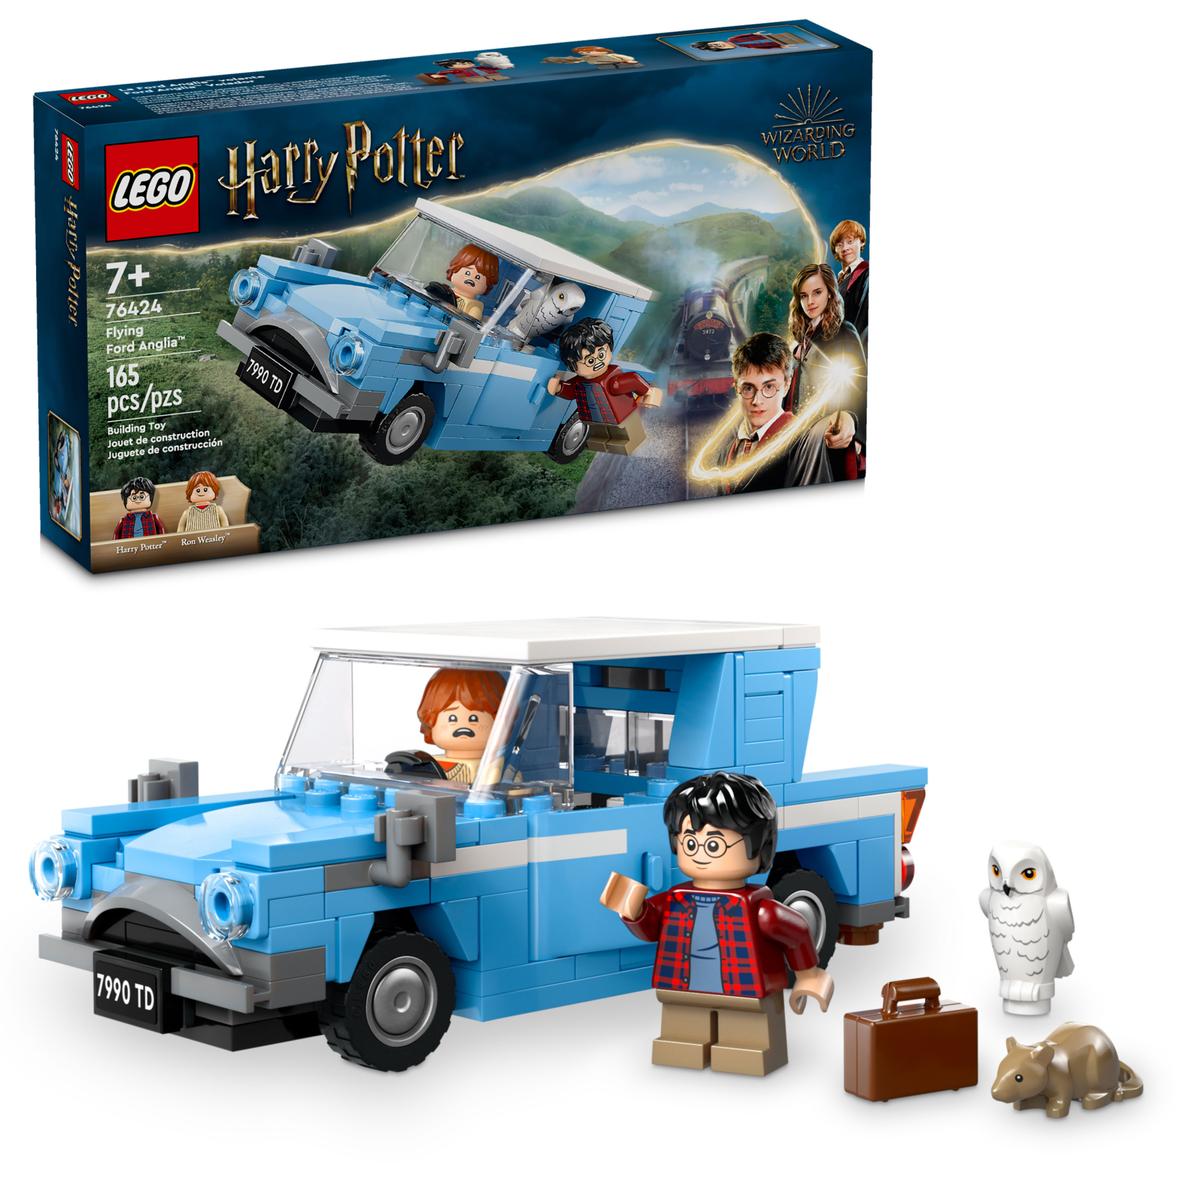 Lego 76424 - Harry Potter: Fliegender Ford Anglia